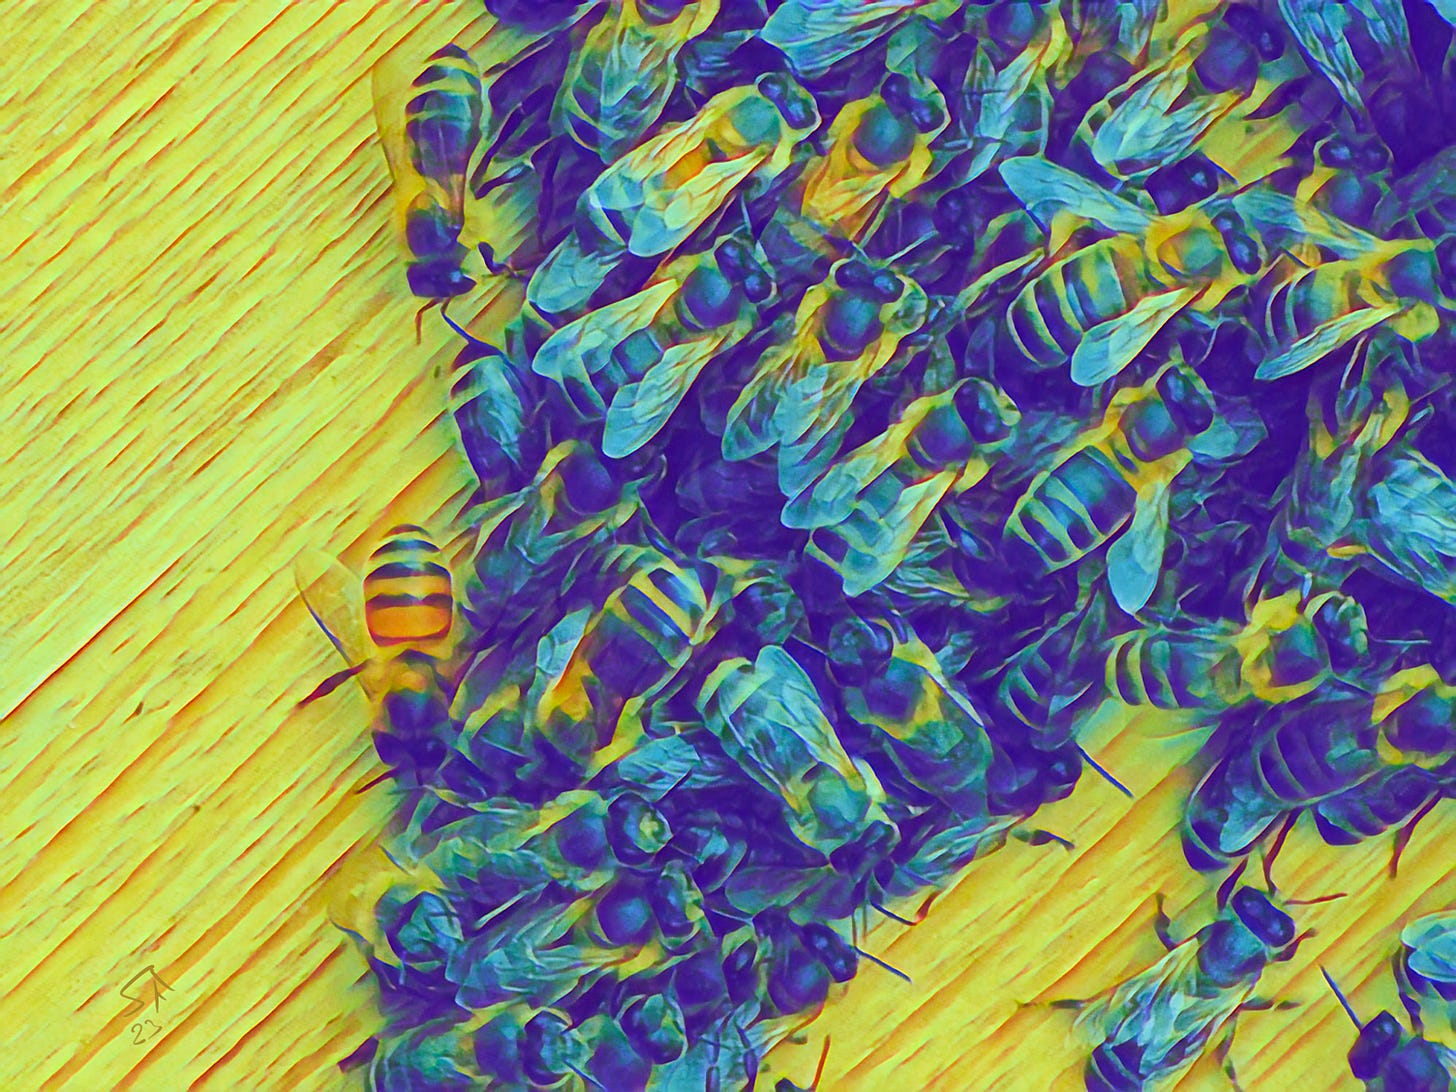 Honeybees on wooden background